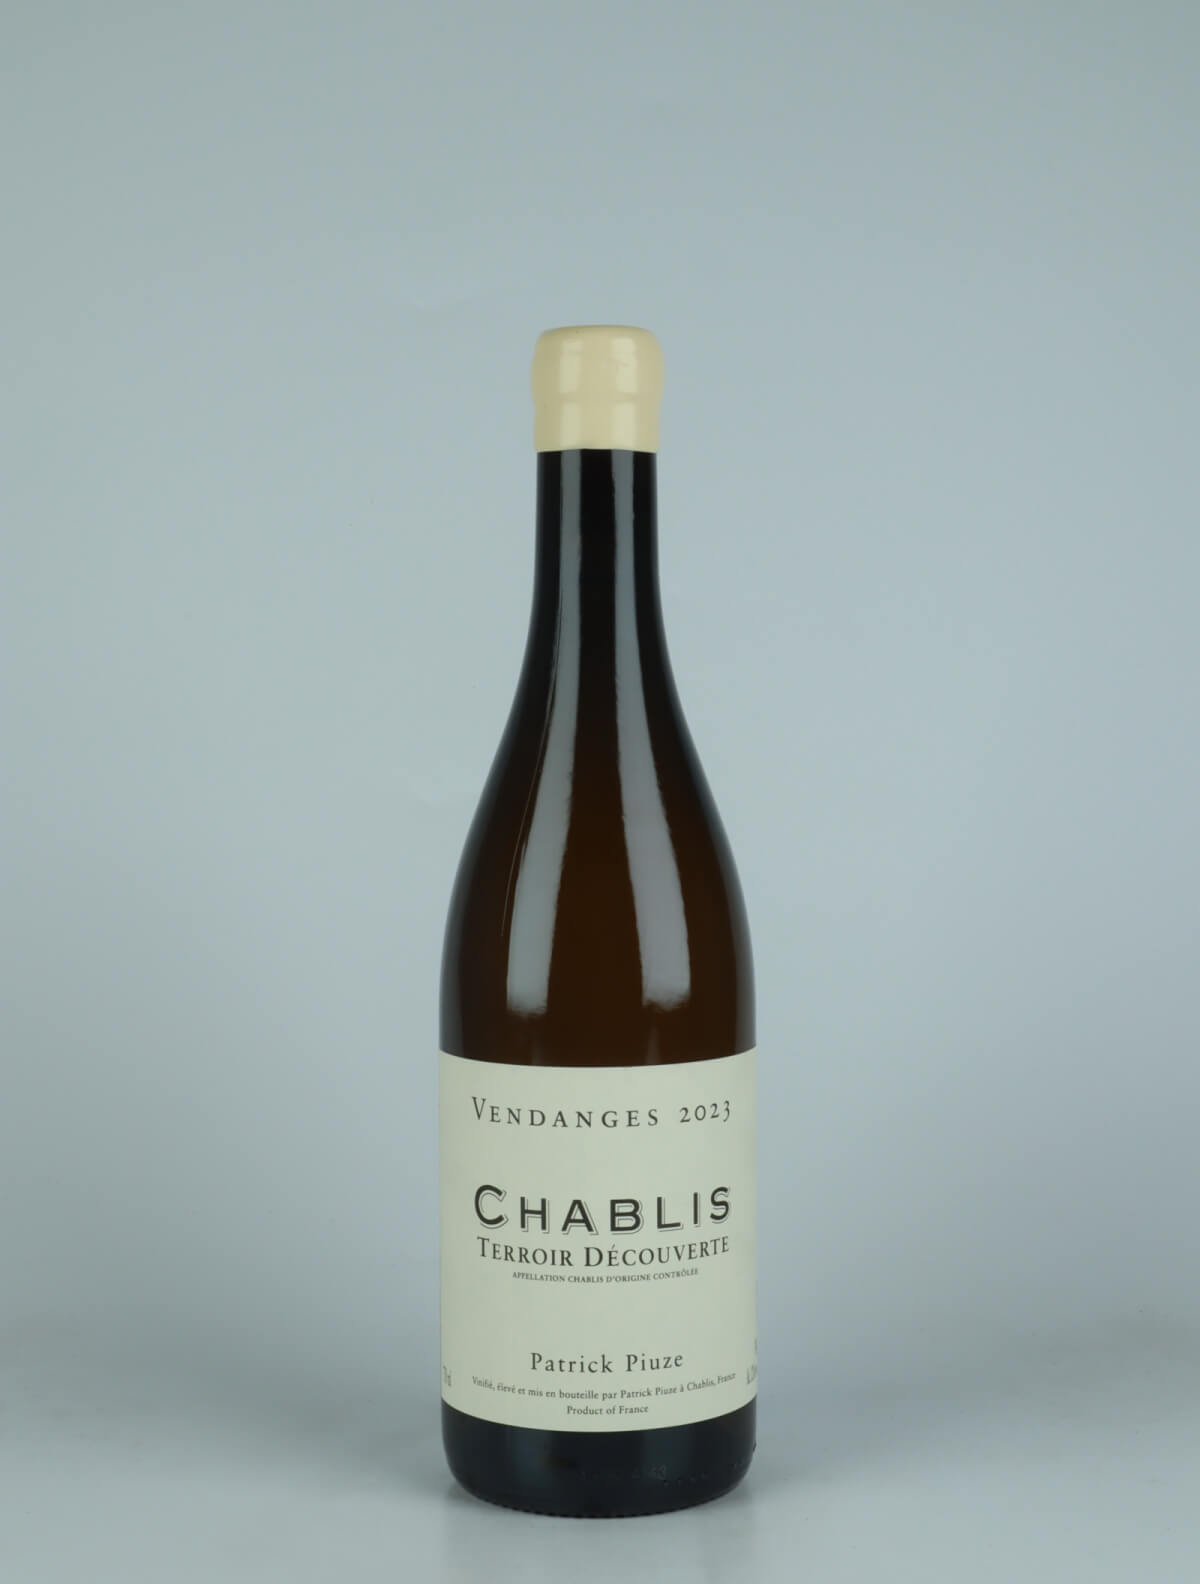 A bottle 2023 Chablis - Terroir Découverte White wine from Patrick Piuze, Burgundy in France